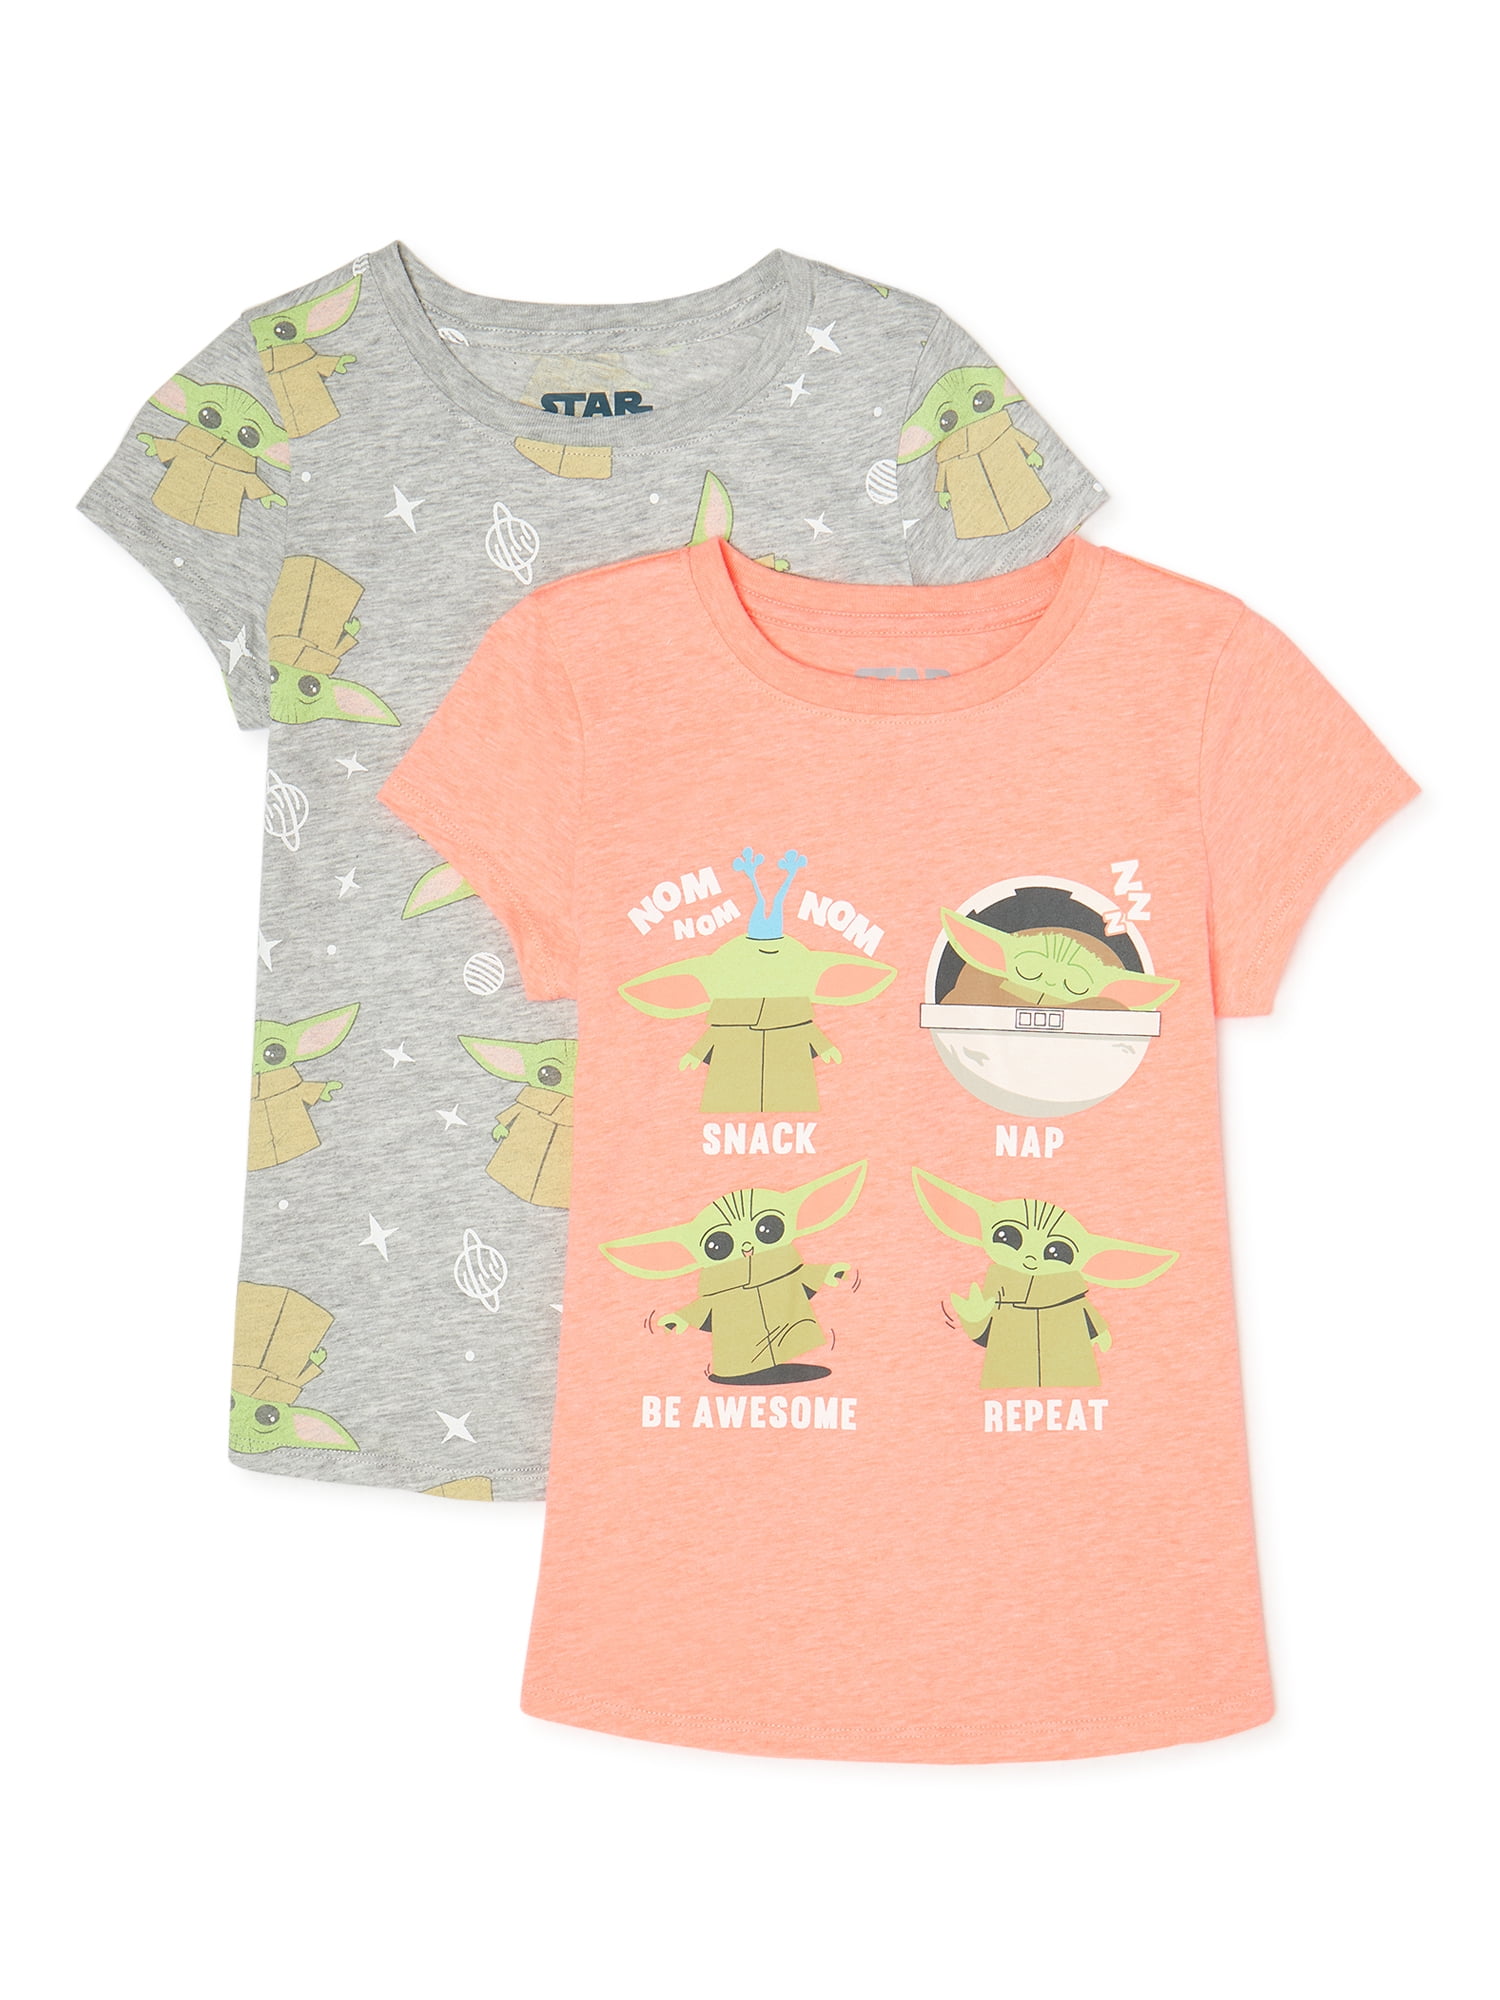 Star Wars Girls Graphic T-Shirts, 2-Pack, Sizes - Walmart.com